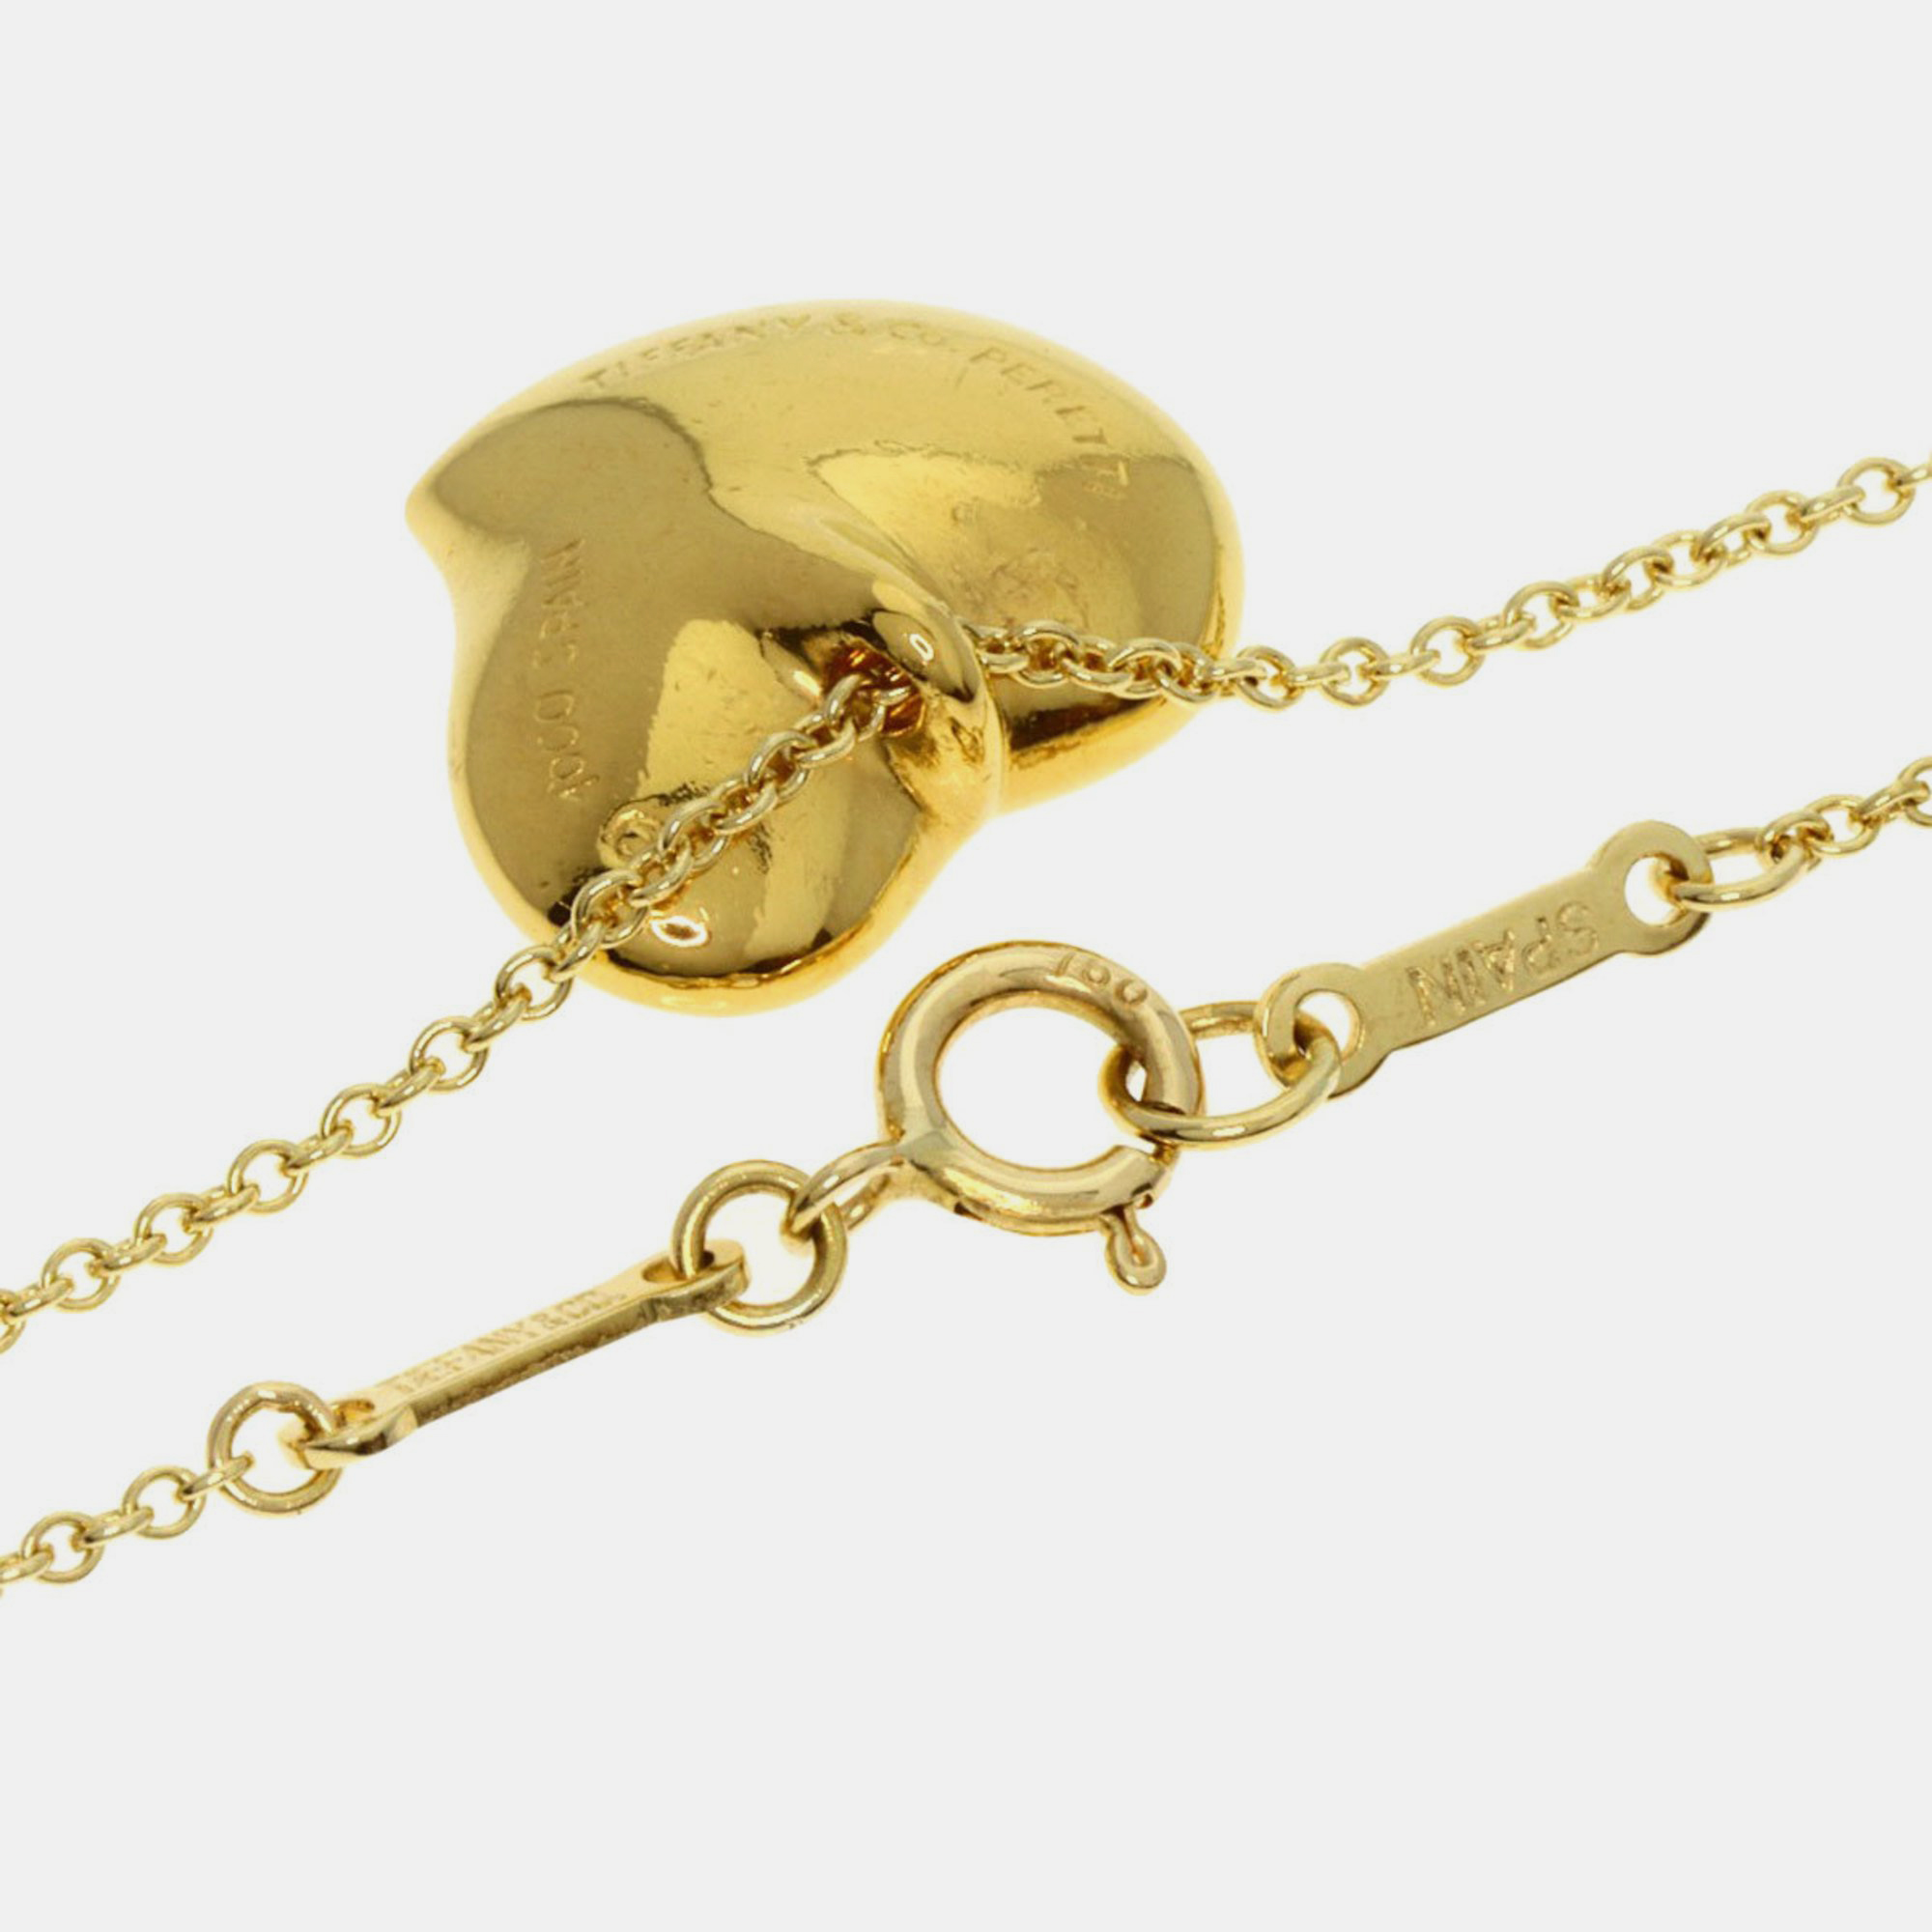 Tiffany & Co. Full Heart 18K Yellow Gold Necklace